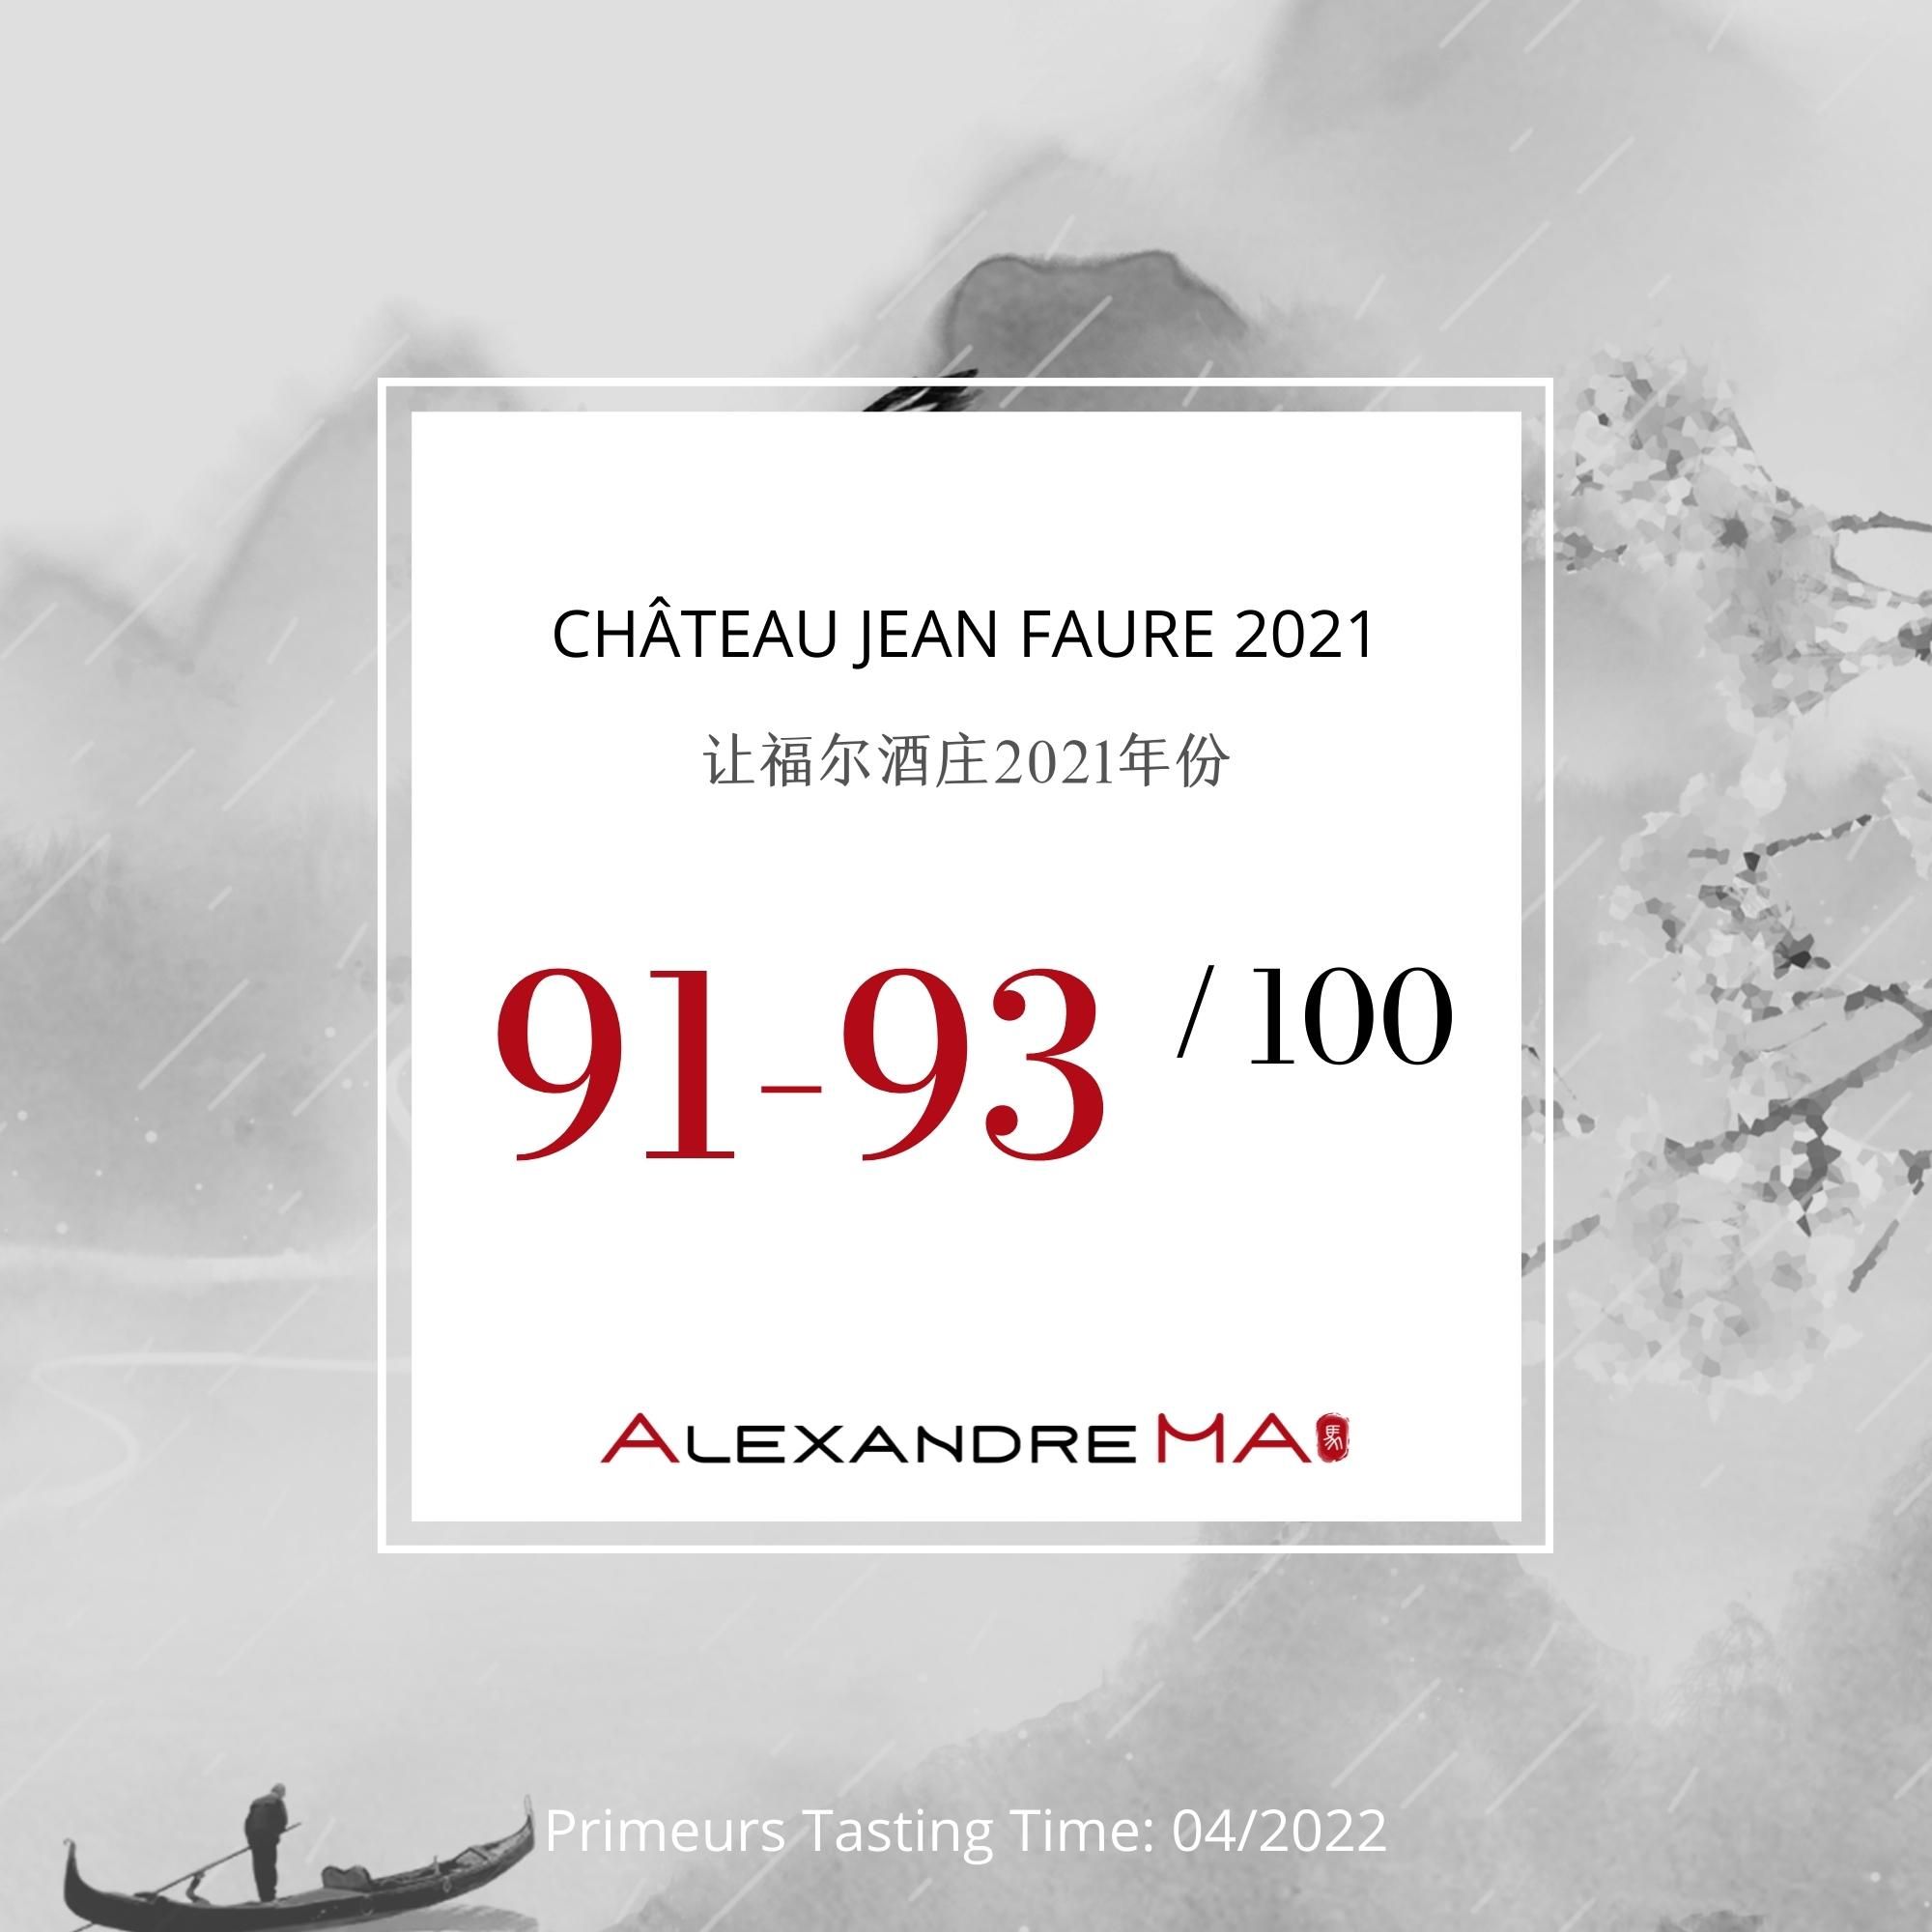 Château Jean Faure 2021 - Alexandre MA